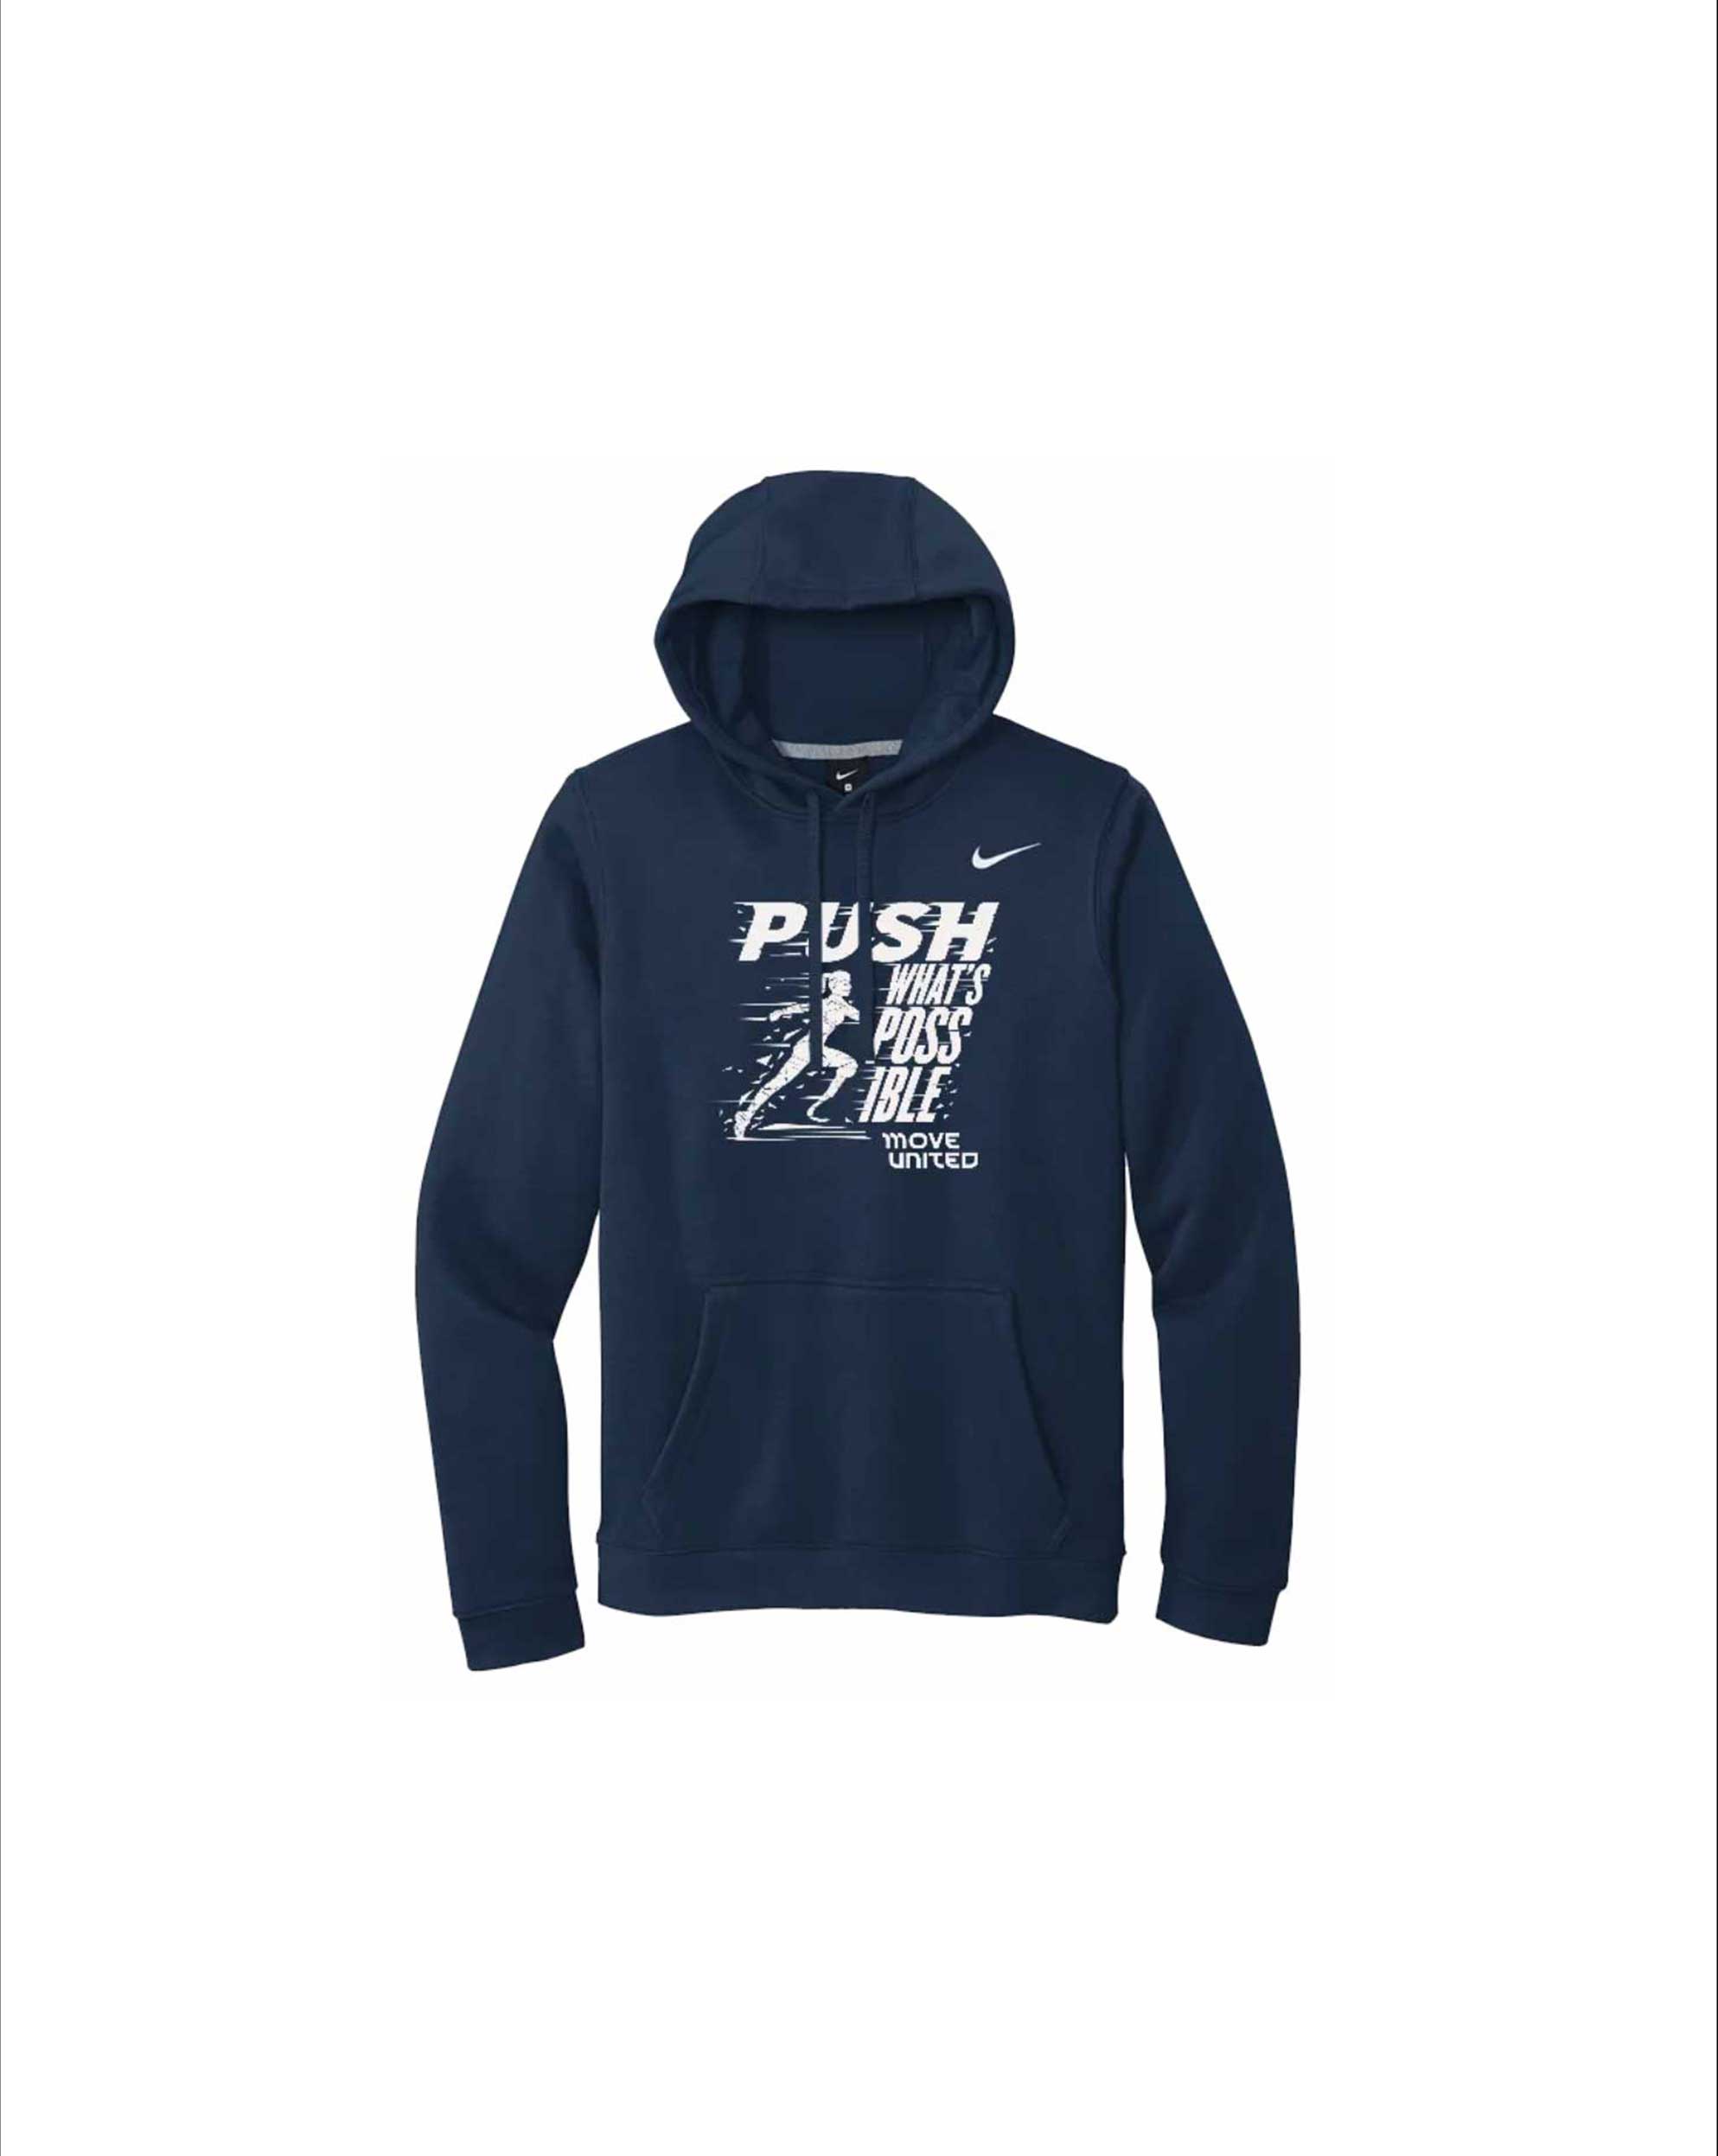 Push what's possible sweatshirt